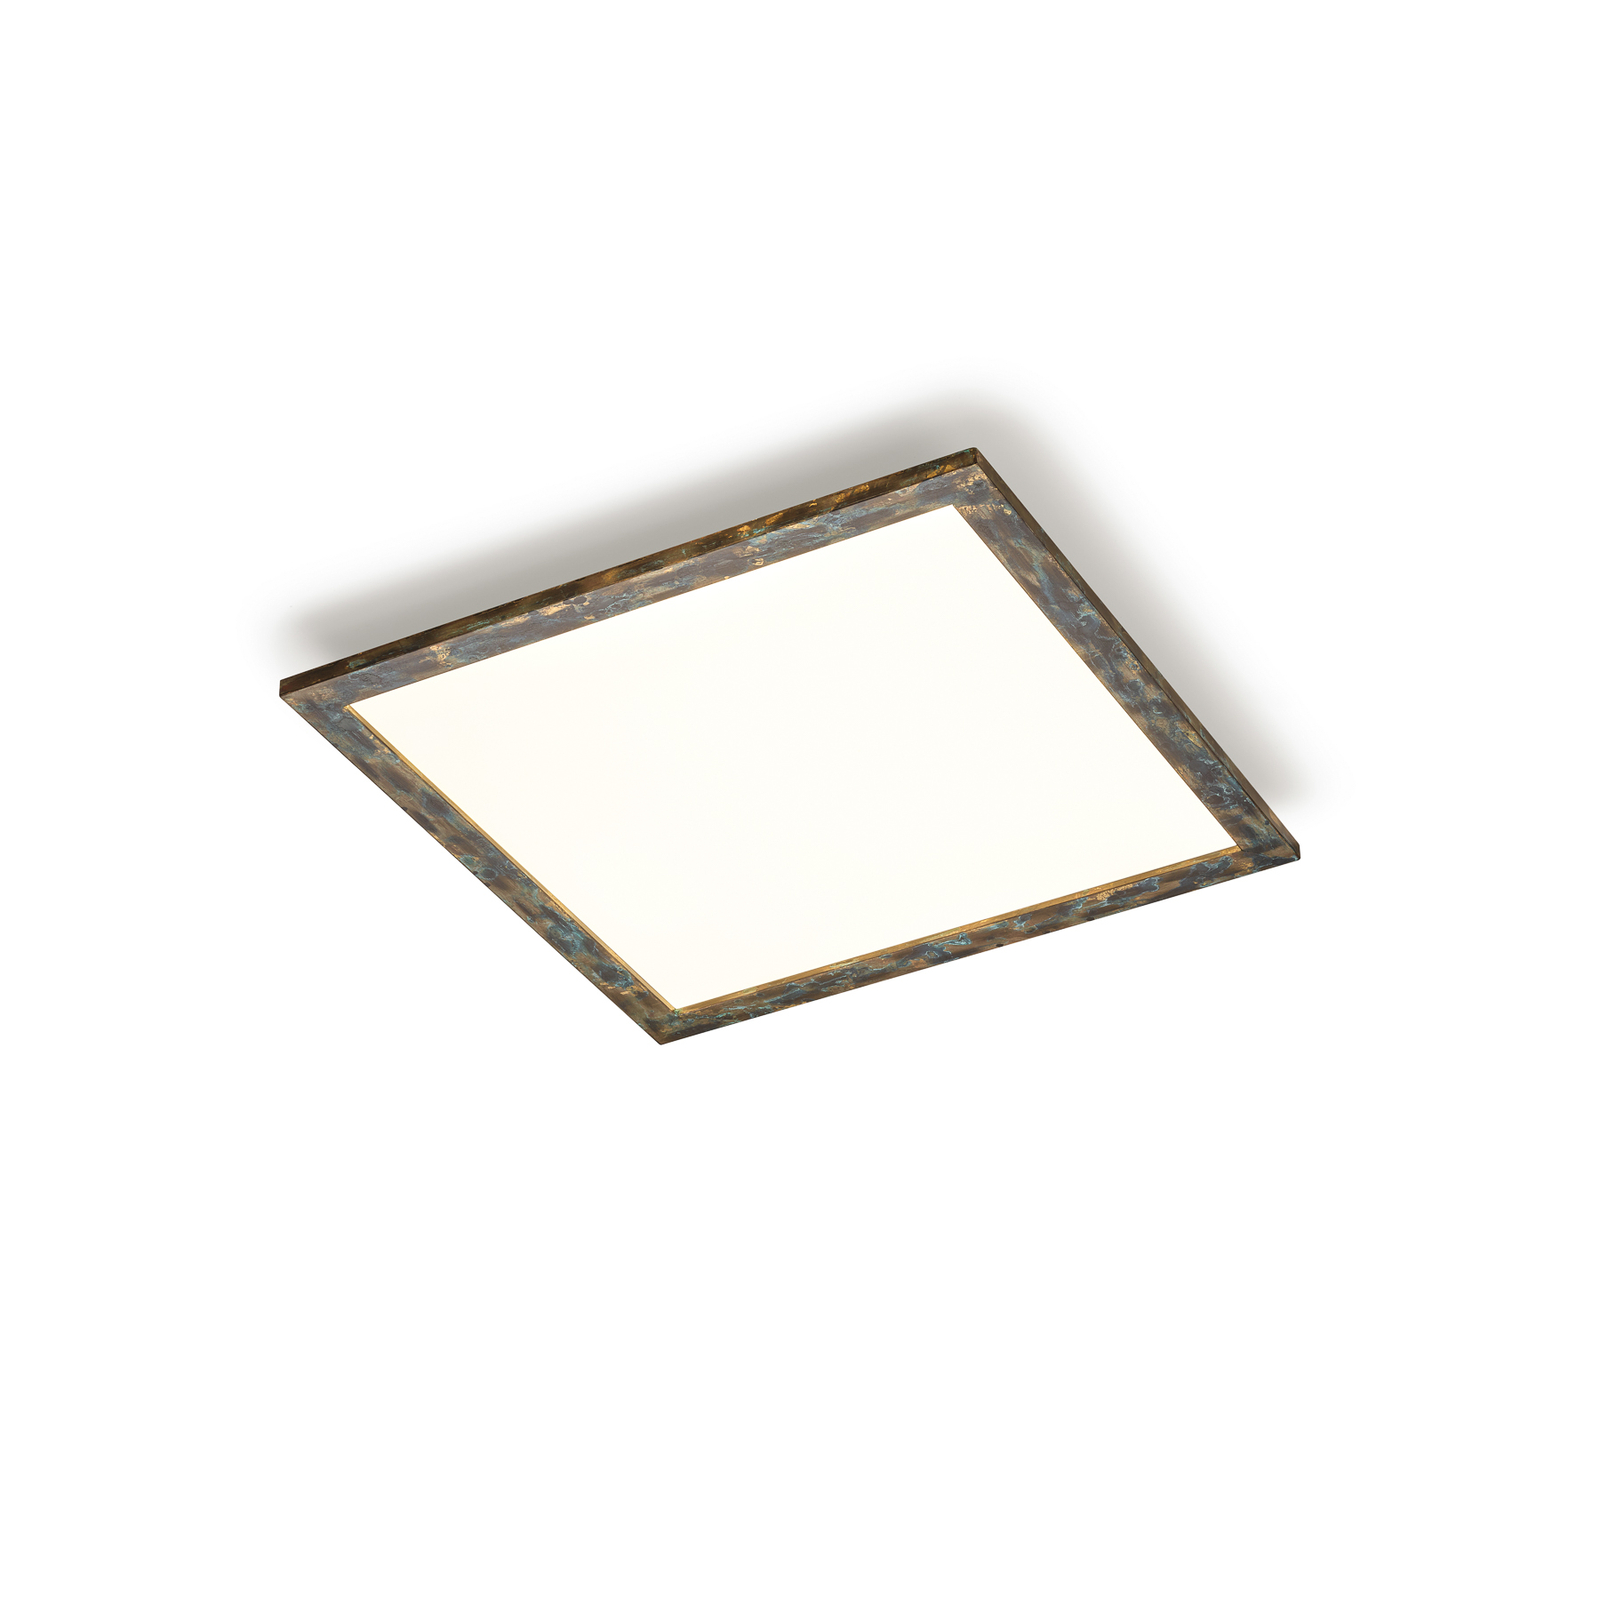 Quitani Aurinor LED panel, gold-coloured patina, 68 cm